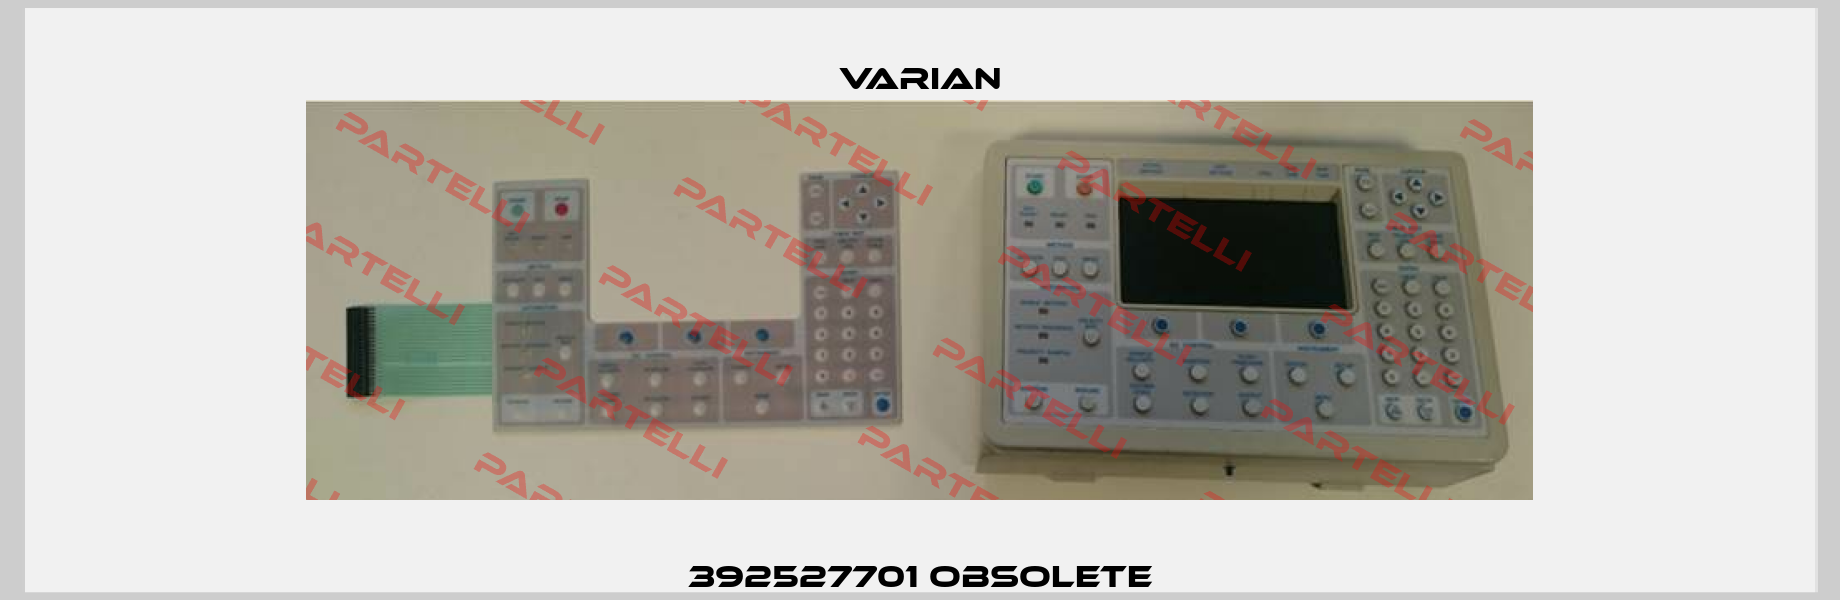 392527701 obsolete Varian